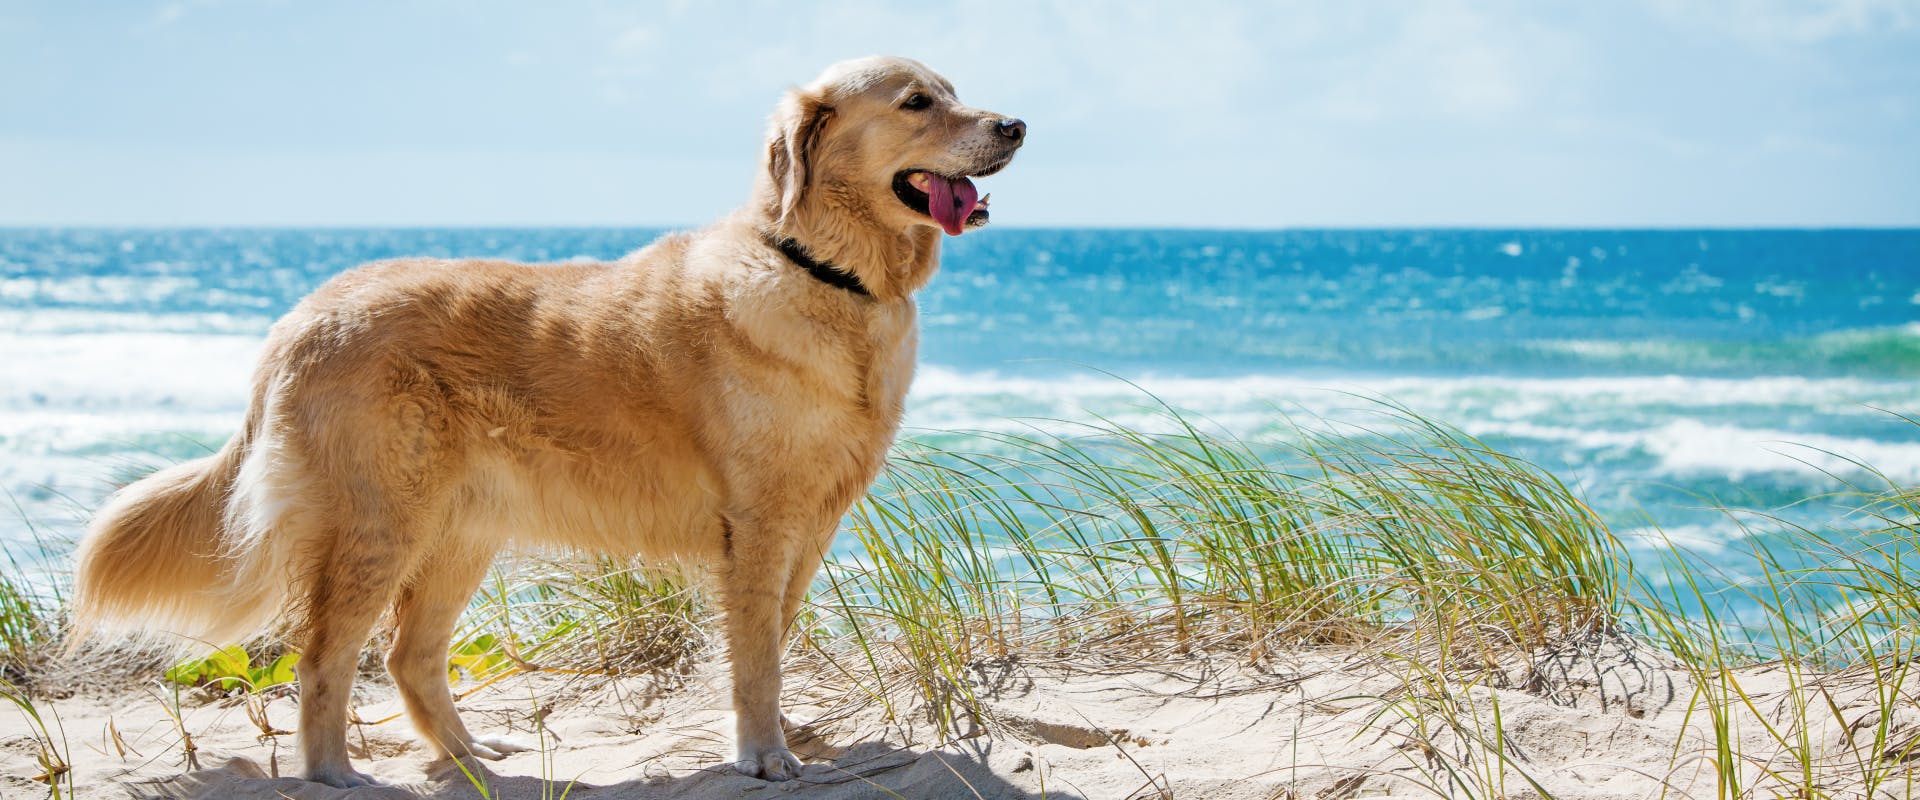 A dog at the beach.